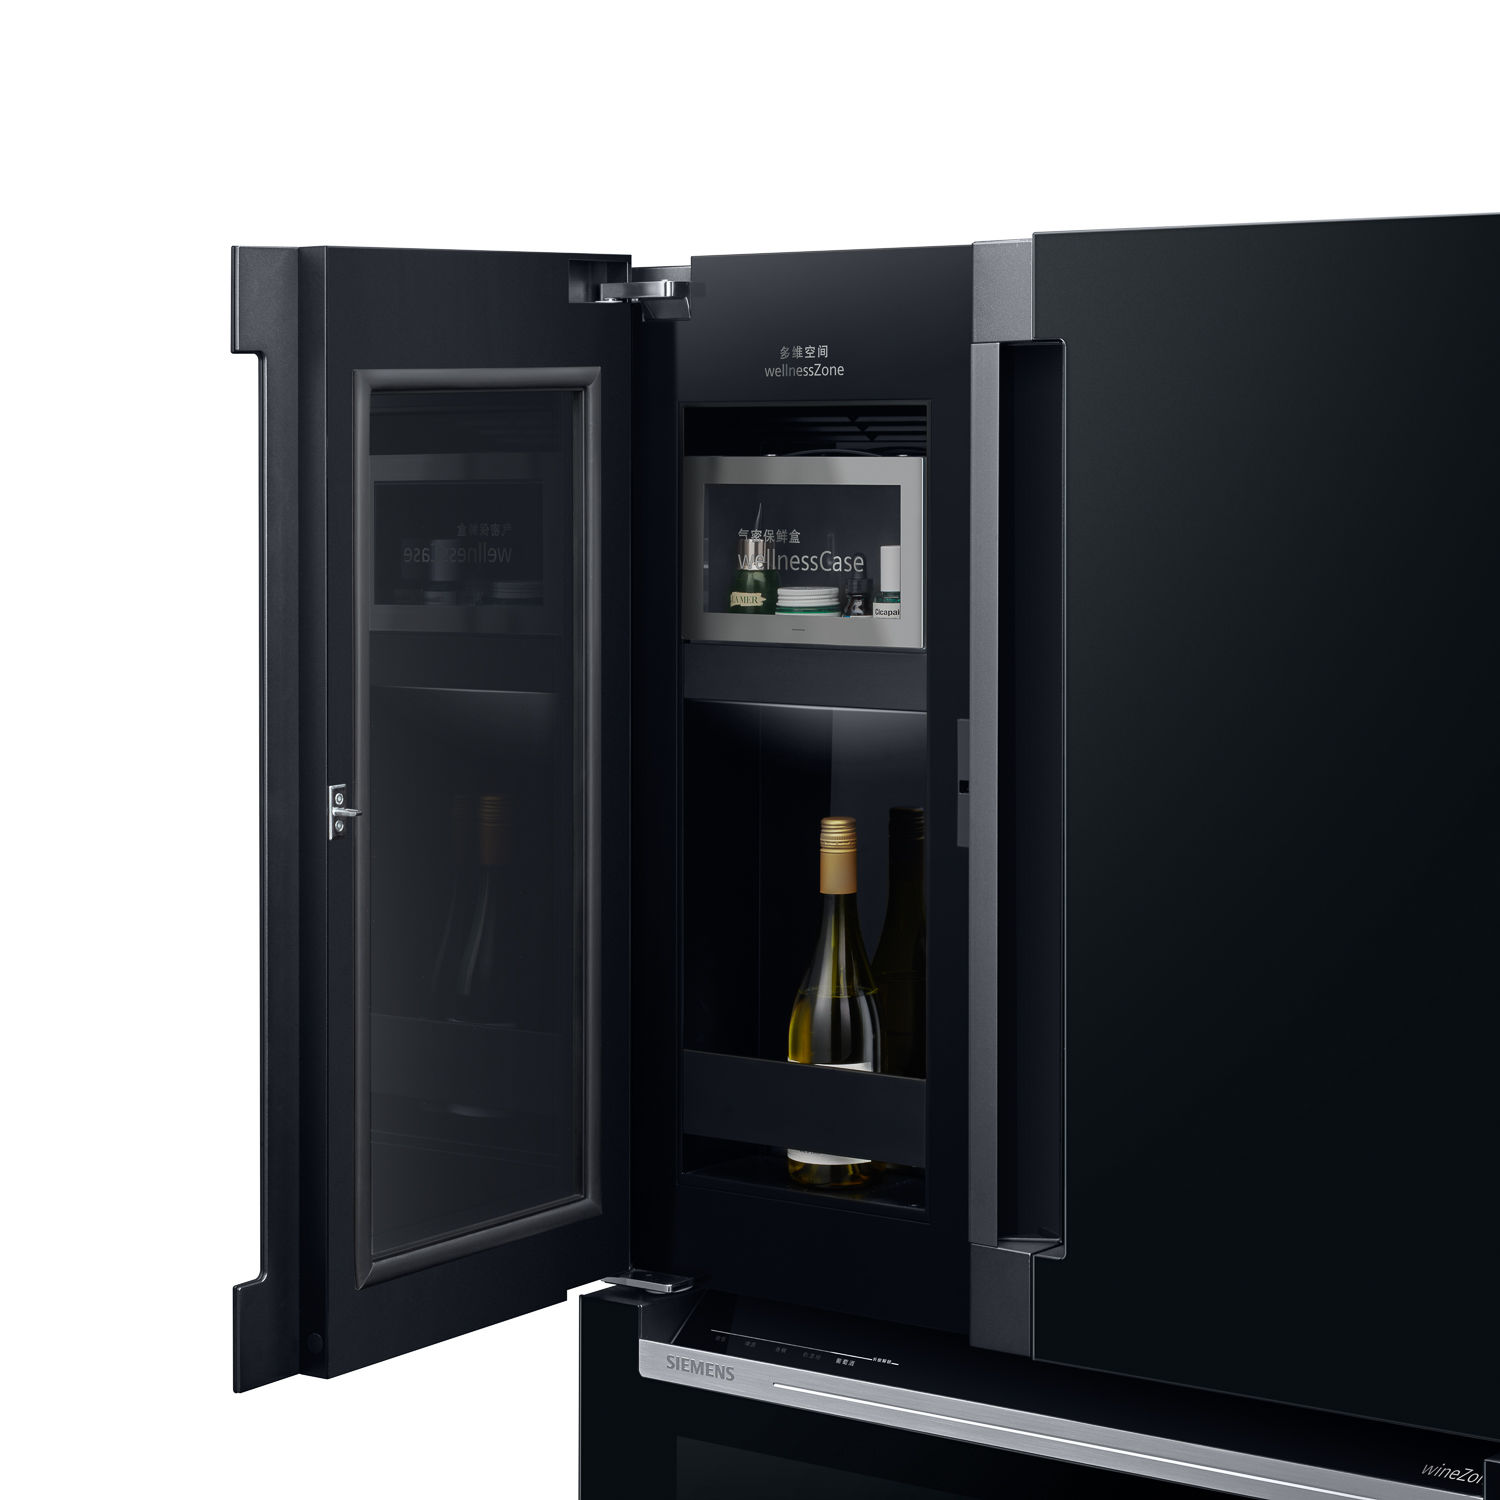 SIEMENS Refrigerator Wine Cooler